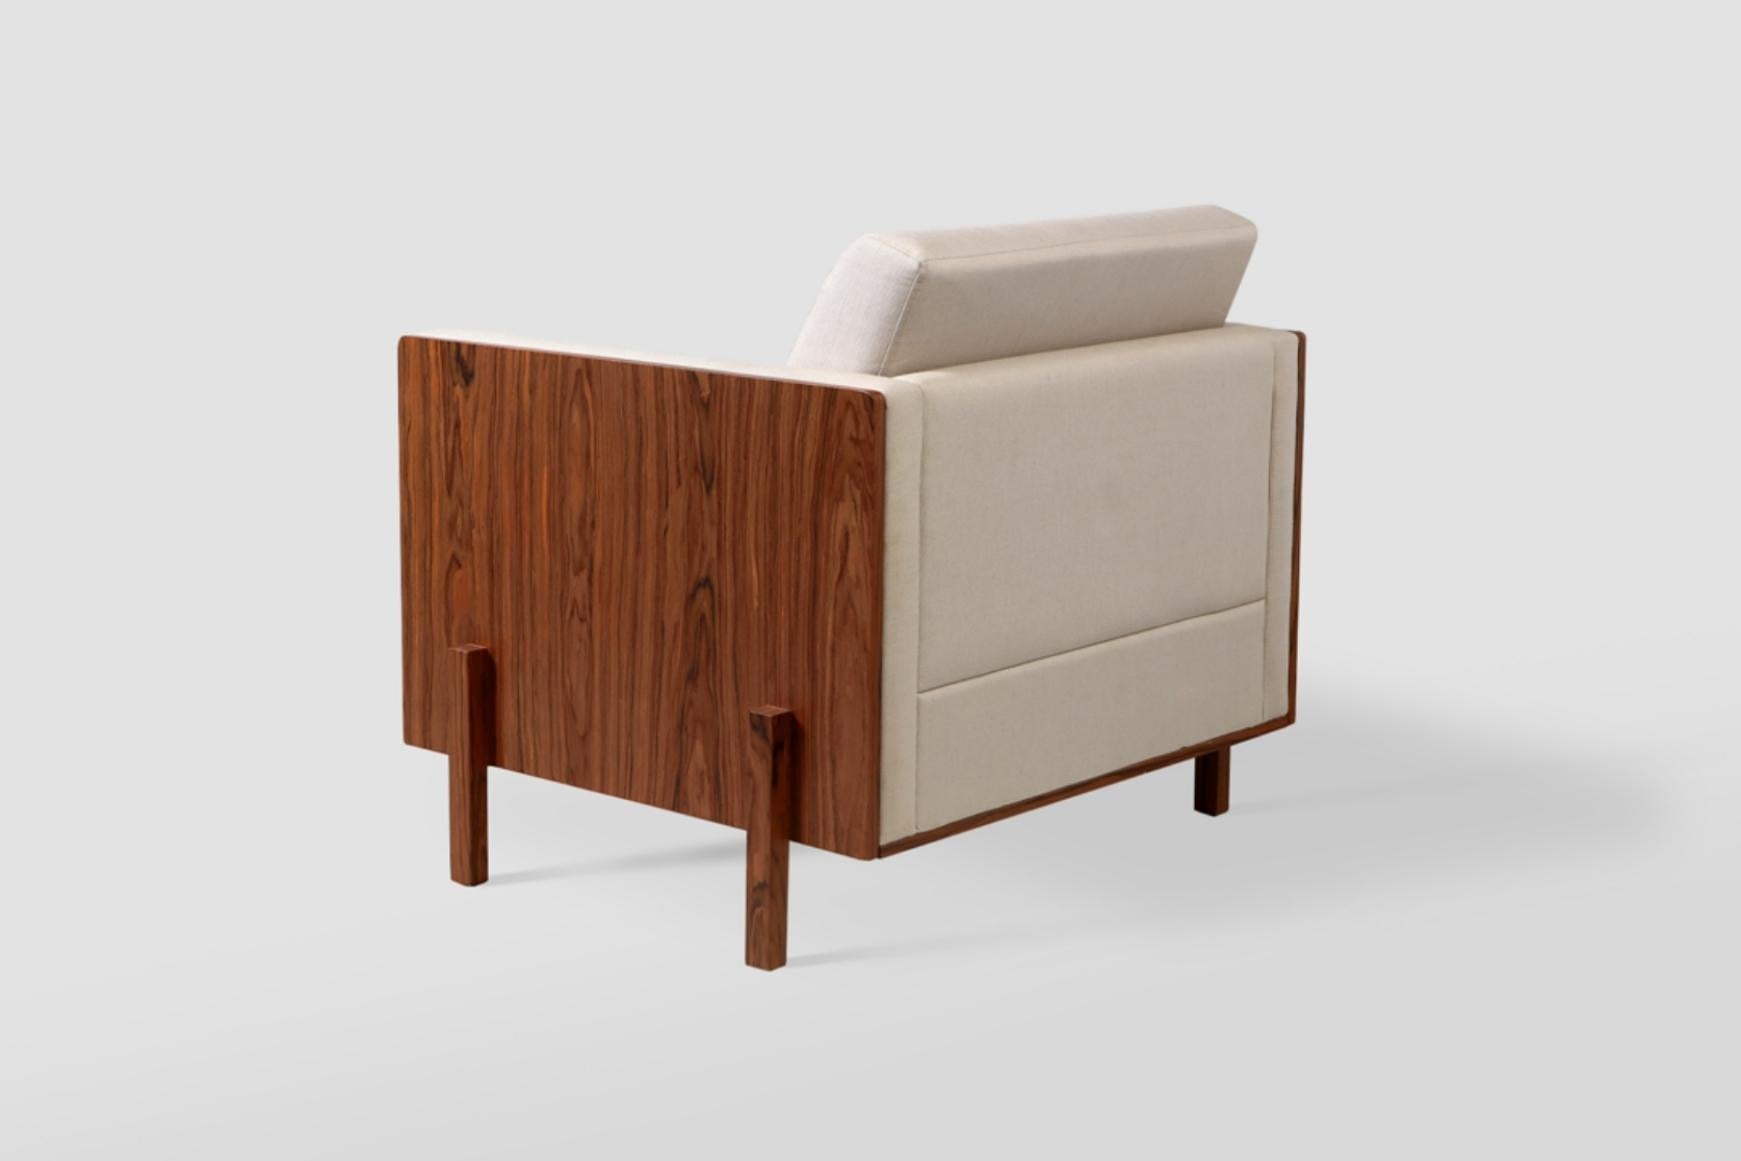 pau wood furniture